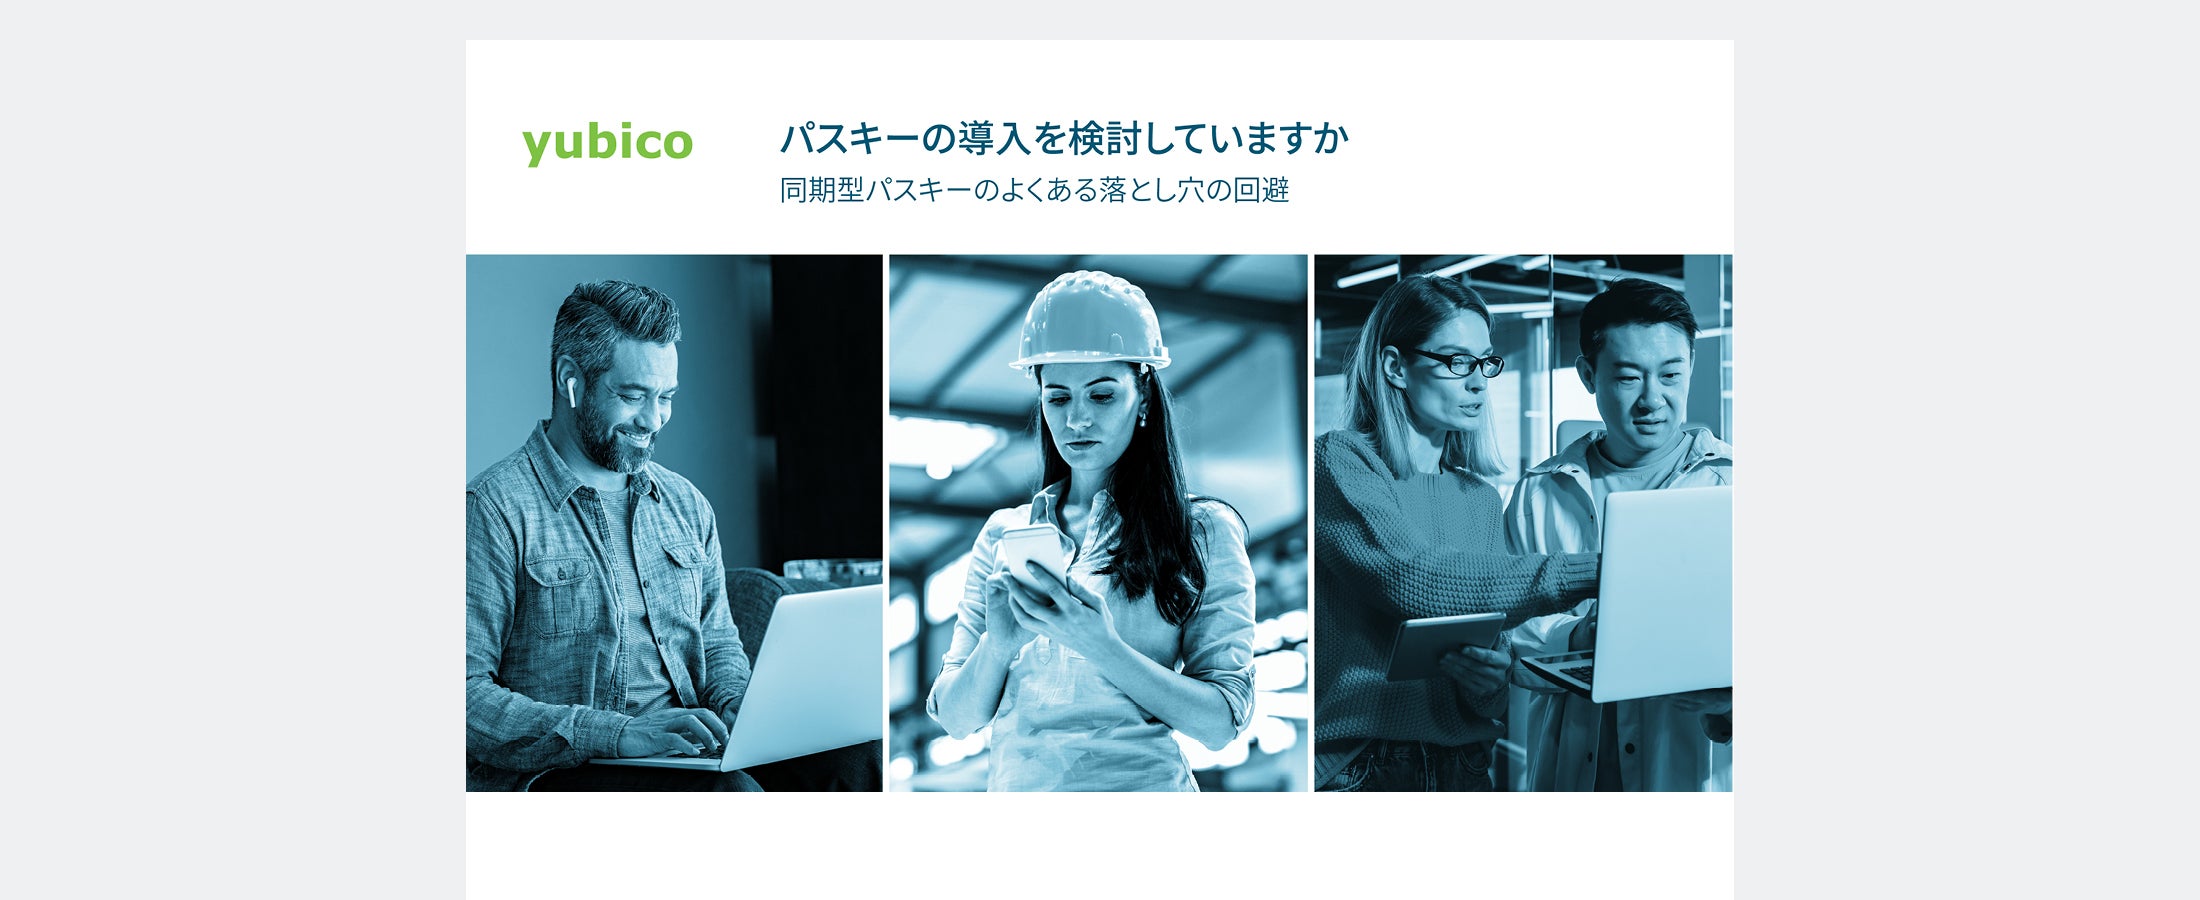 Passkey Ebook in Japanese